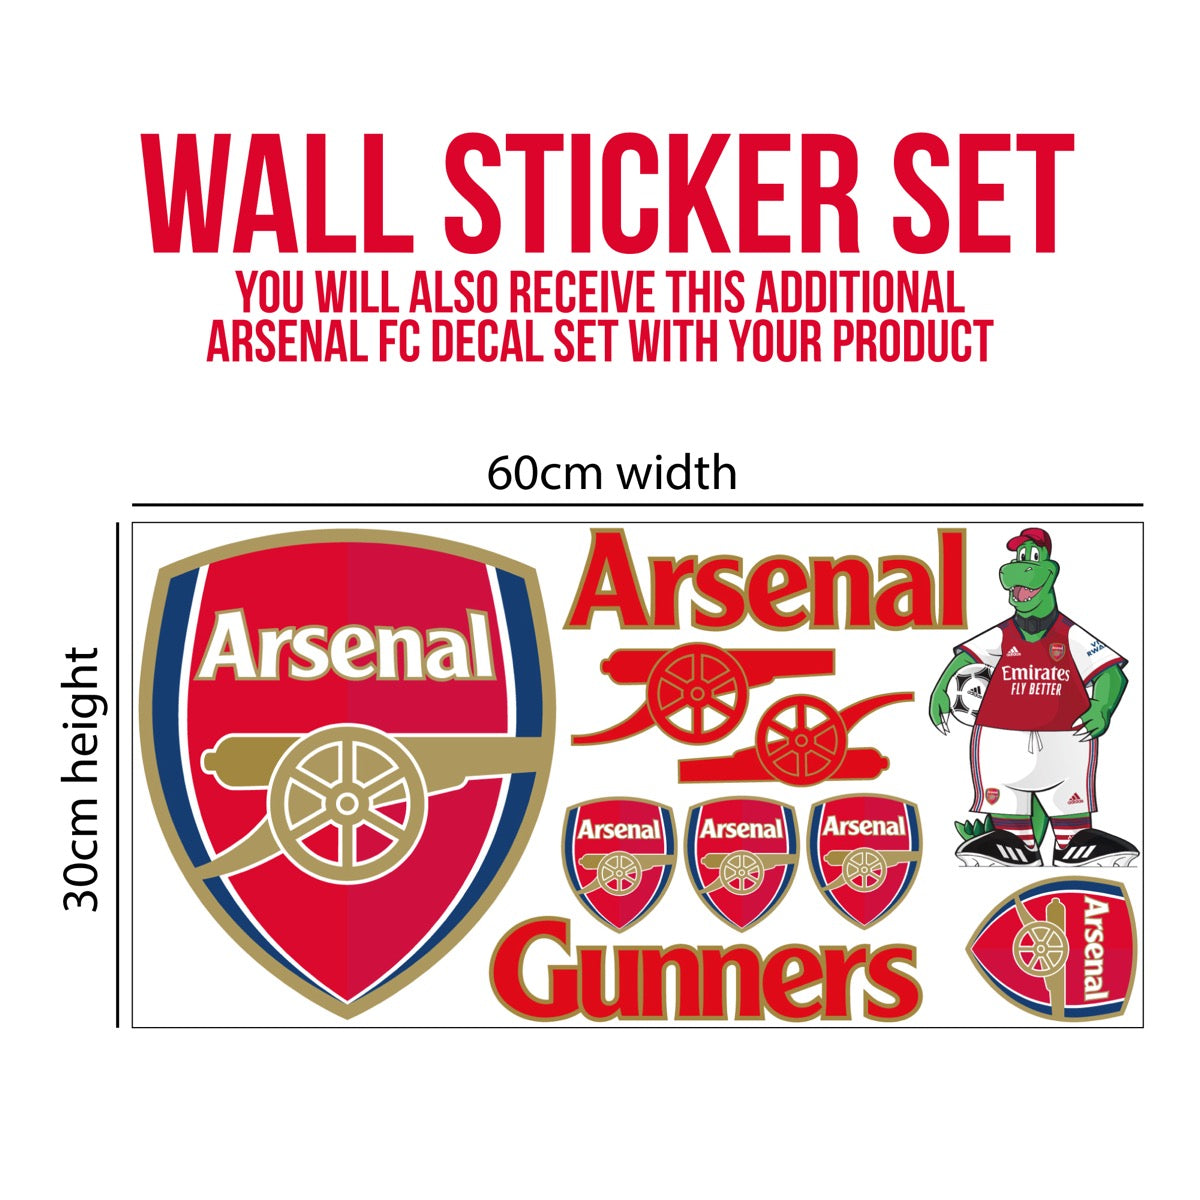 Arsenal Football Club - Smashed Emirates Stadium Rooftop View + Gunners Wall Sticker Set